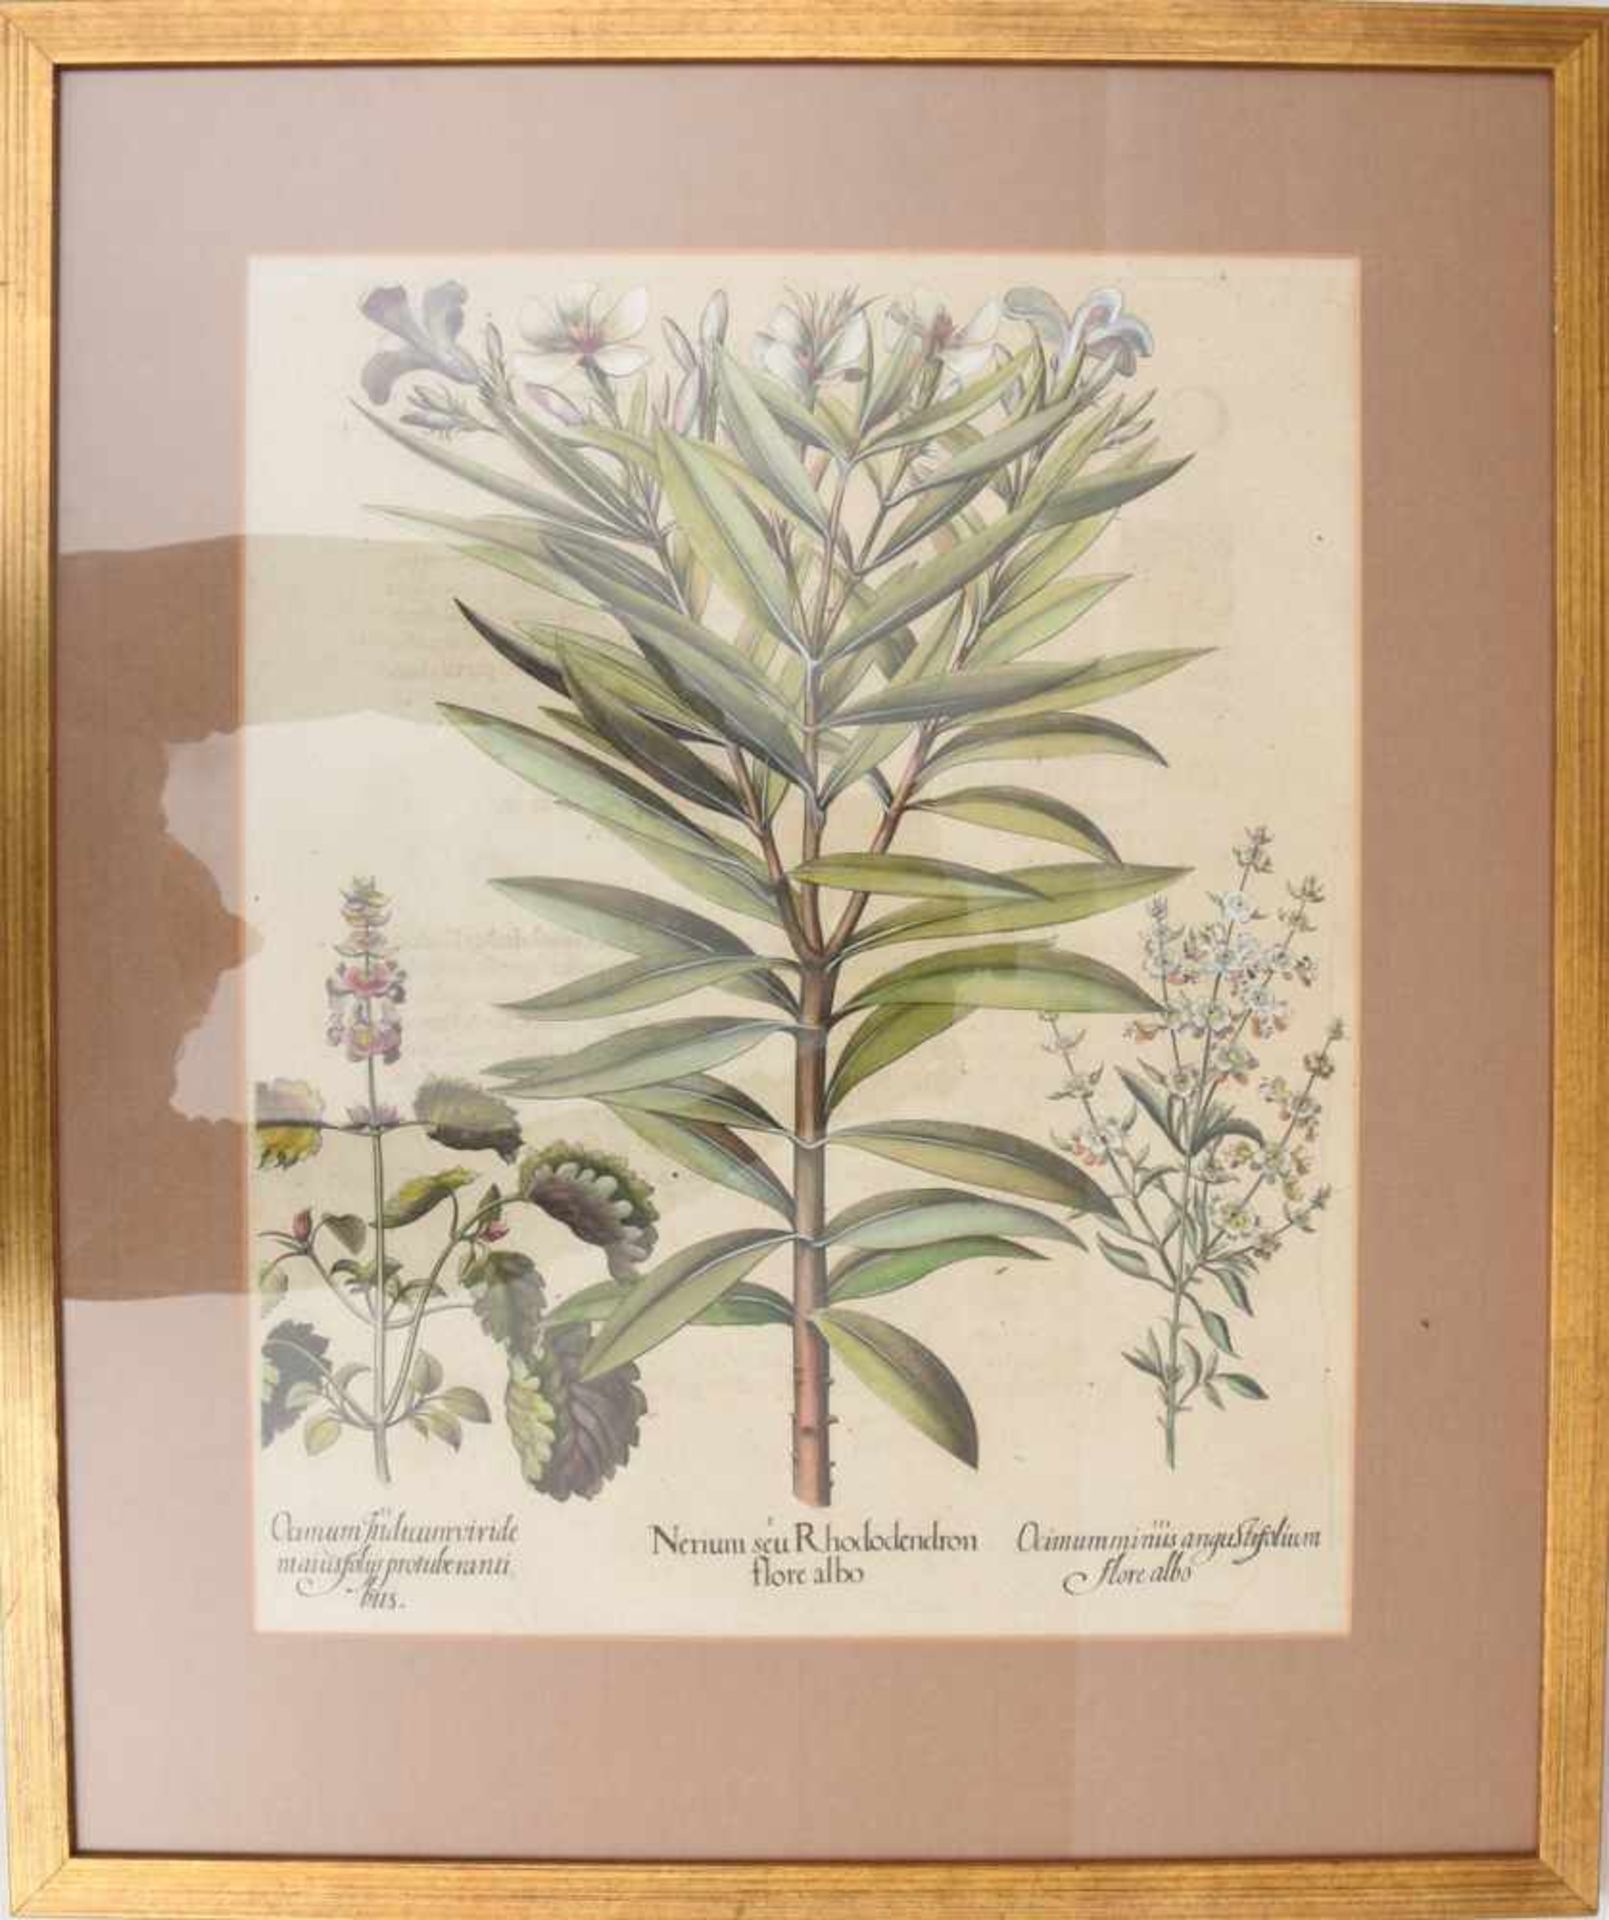 BASILIUS BESLER, Nerium seu Rhododendron, Auszug aus dem Hortus Eystettensis, Kupferstich, - Image 3 of 3